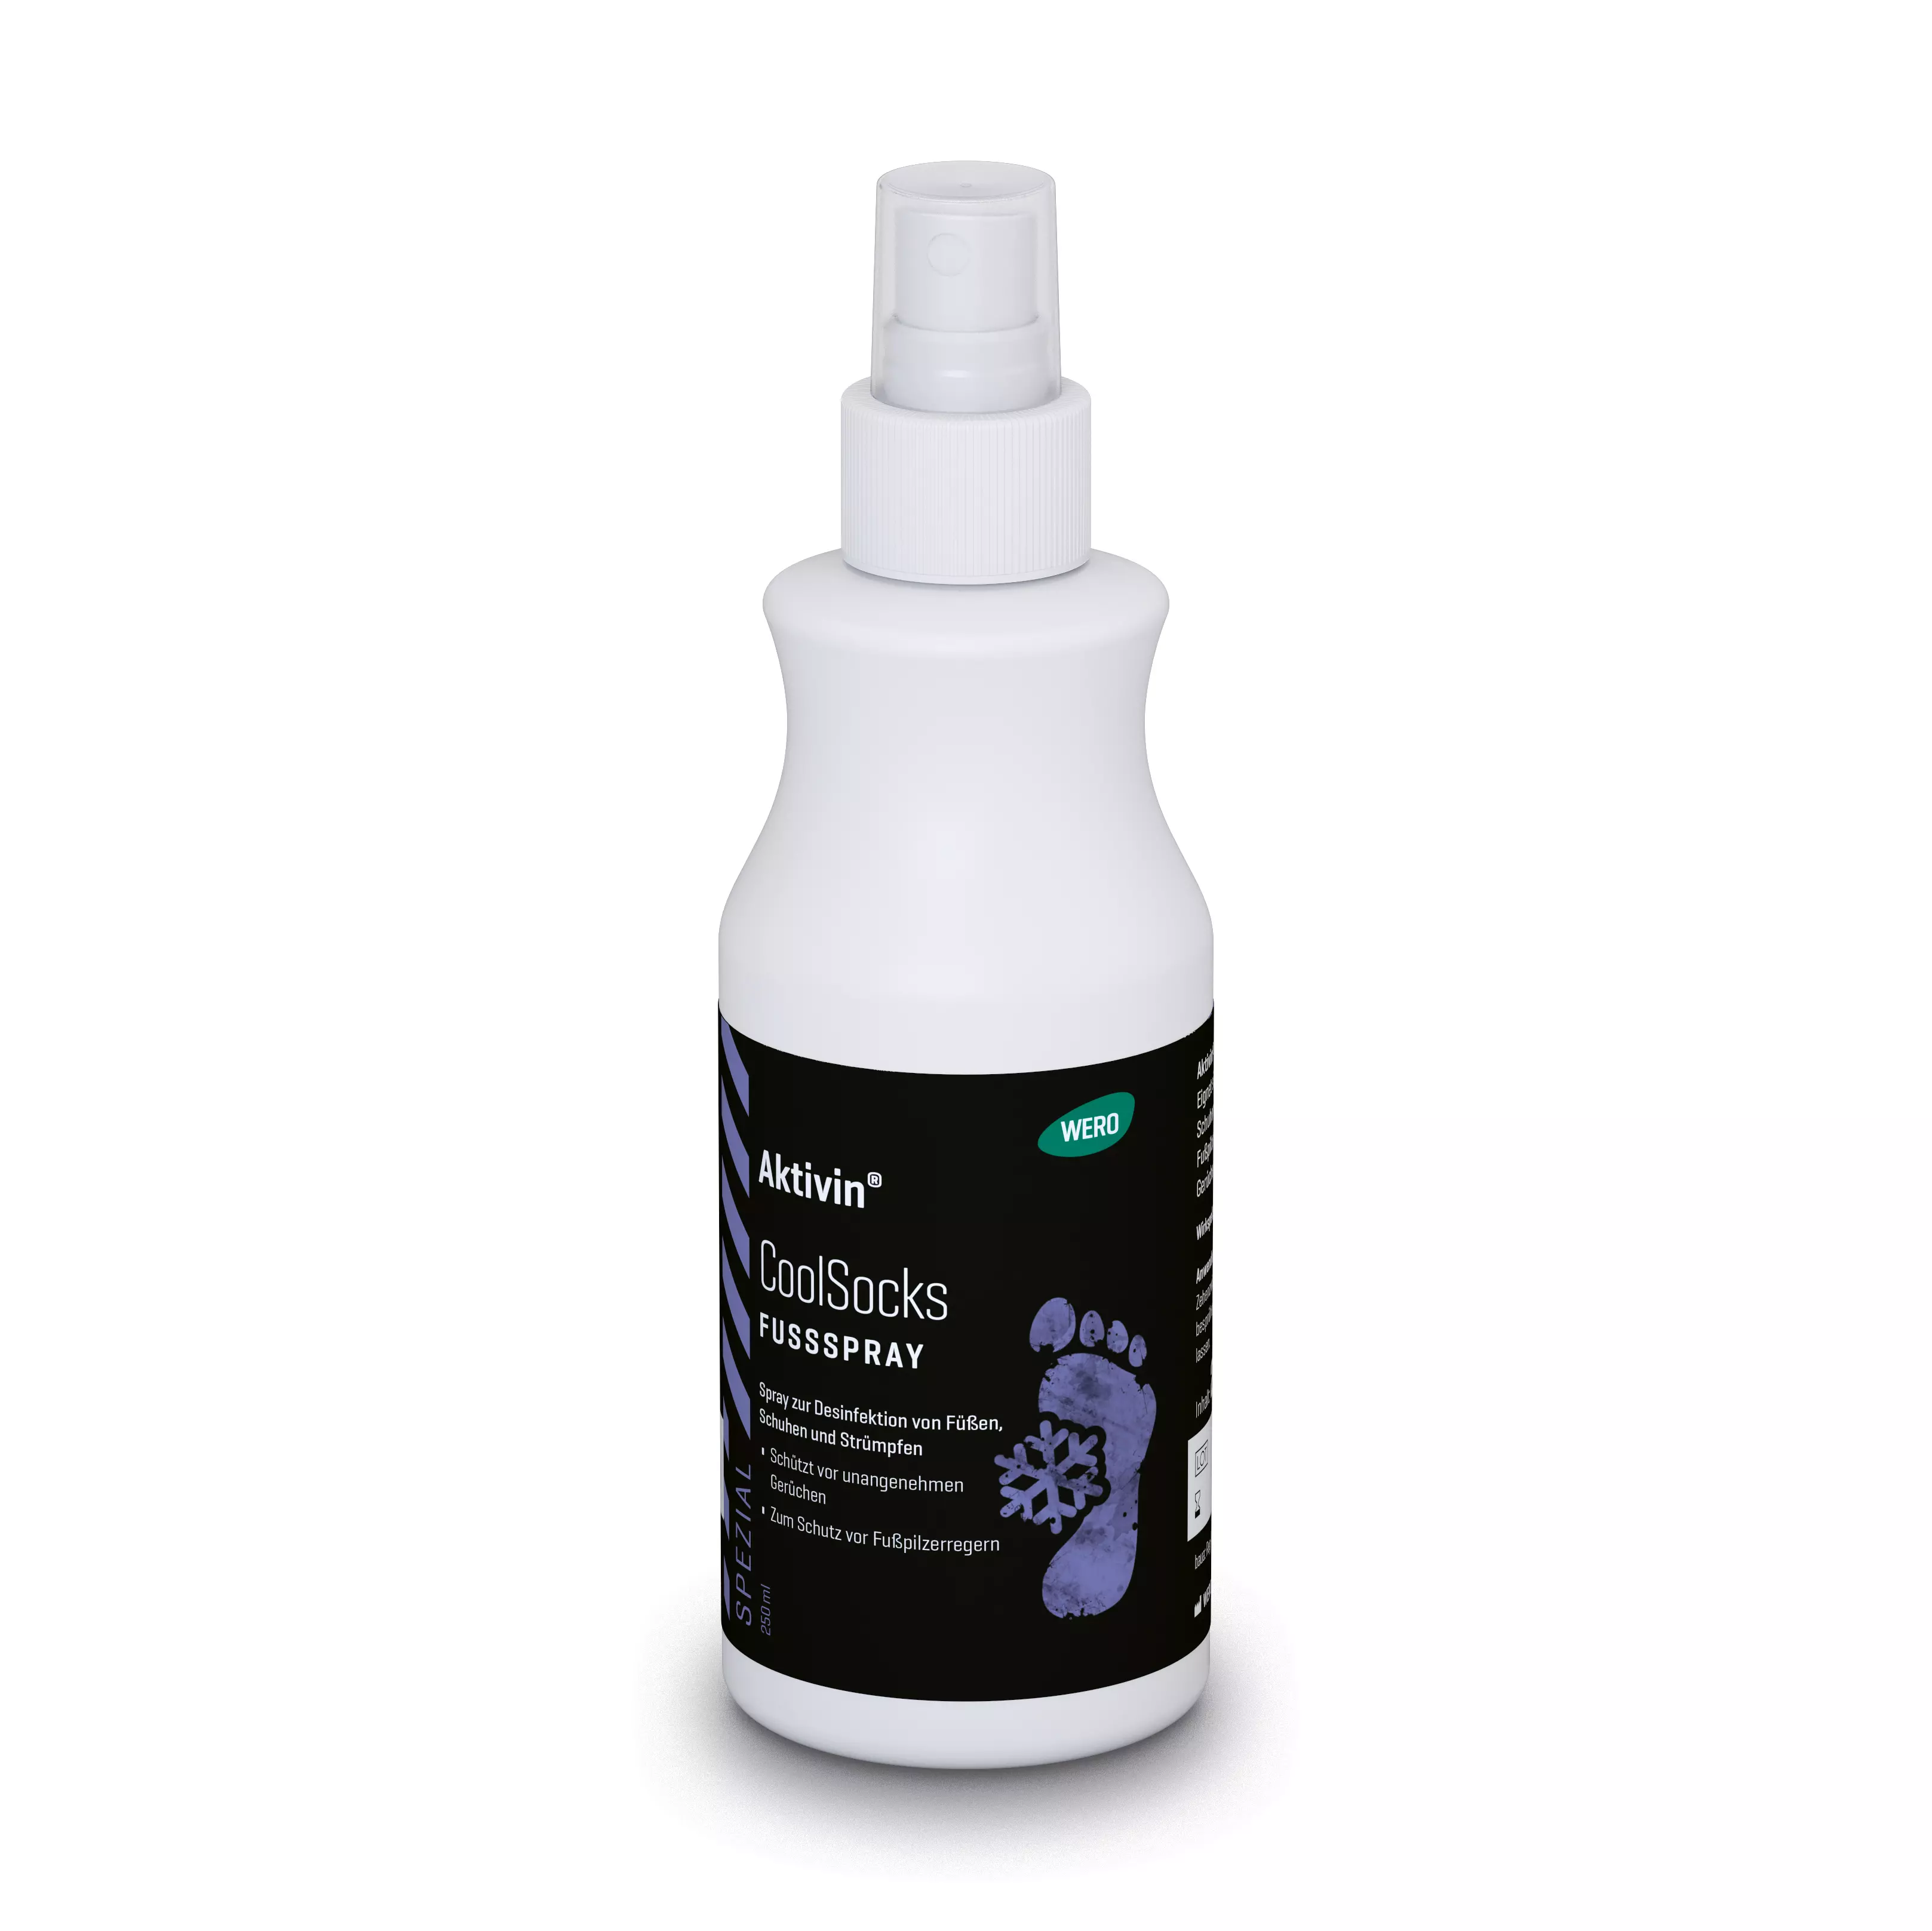 Foot spray Aktivin® CoolSocks, 250 ml